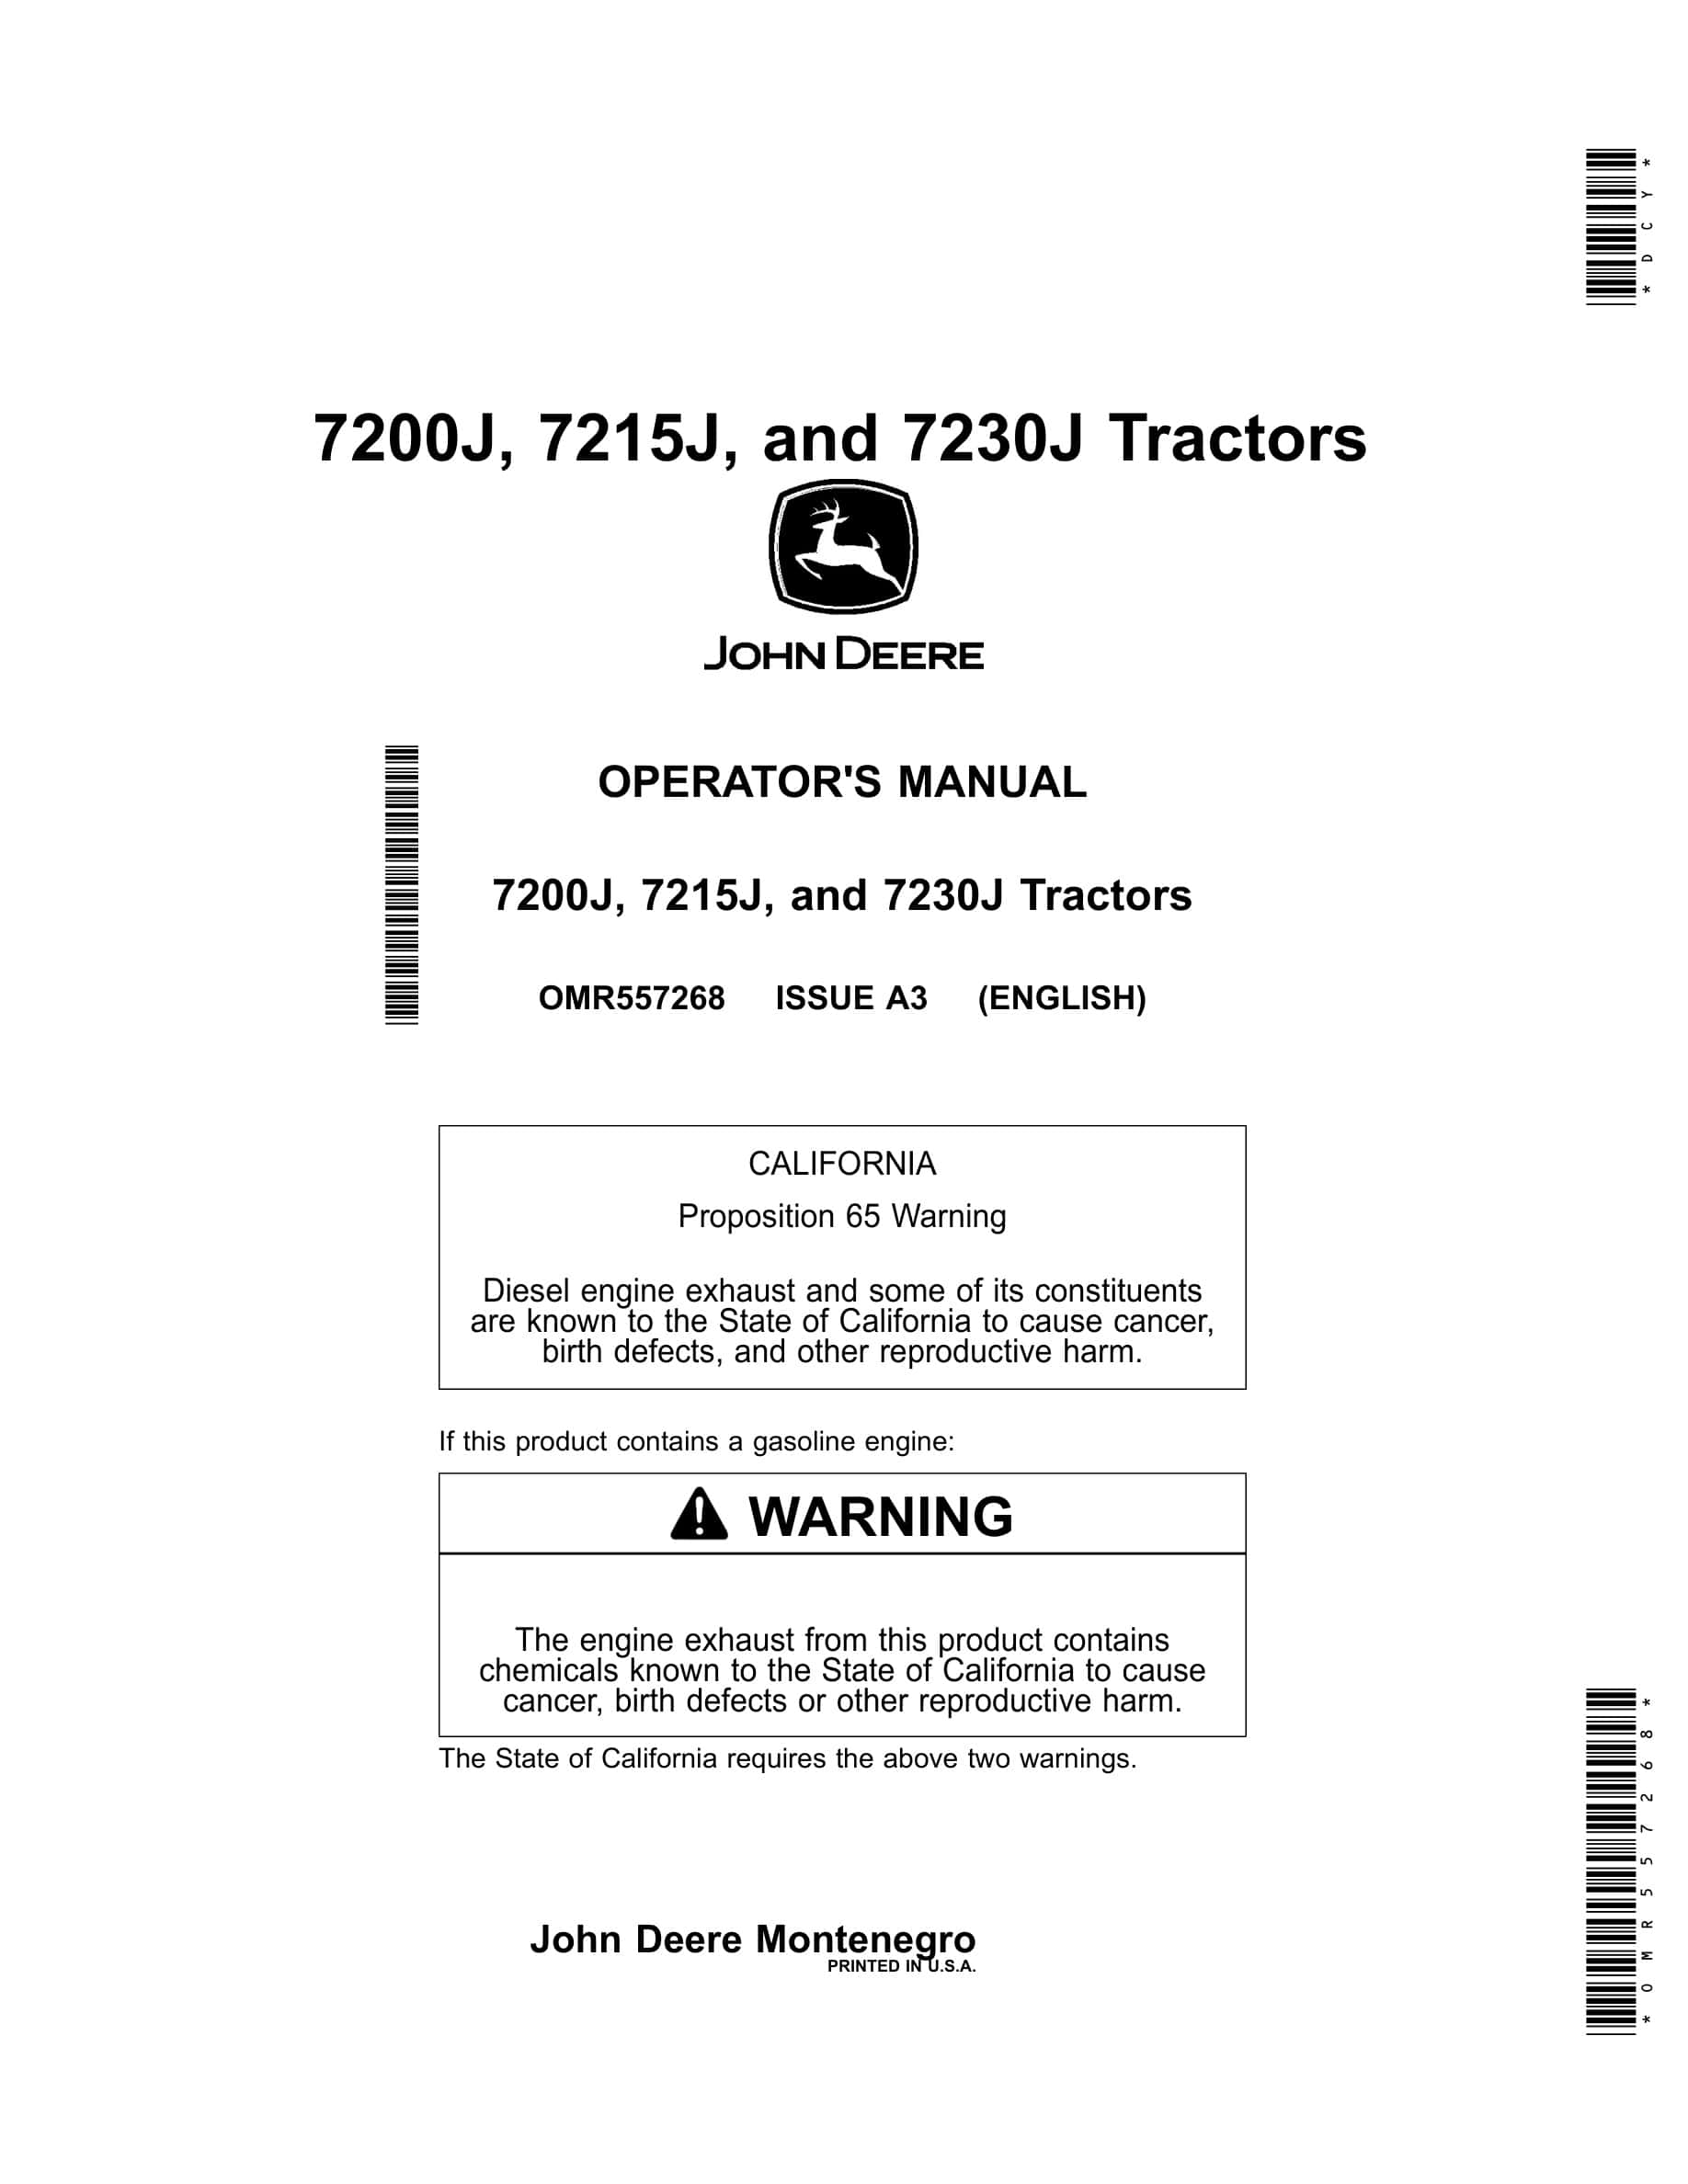 John Deere 7200j, 7215j, And 7230j Tractors Operator Manuals OMR557268-1